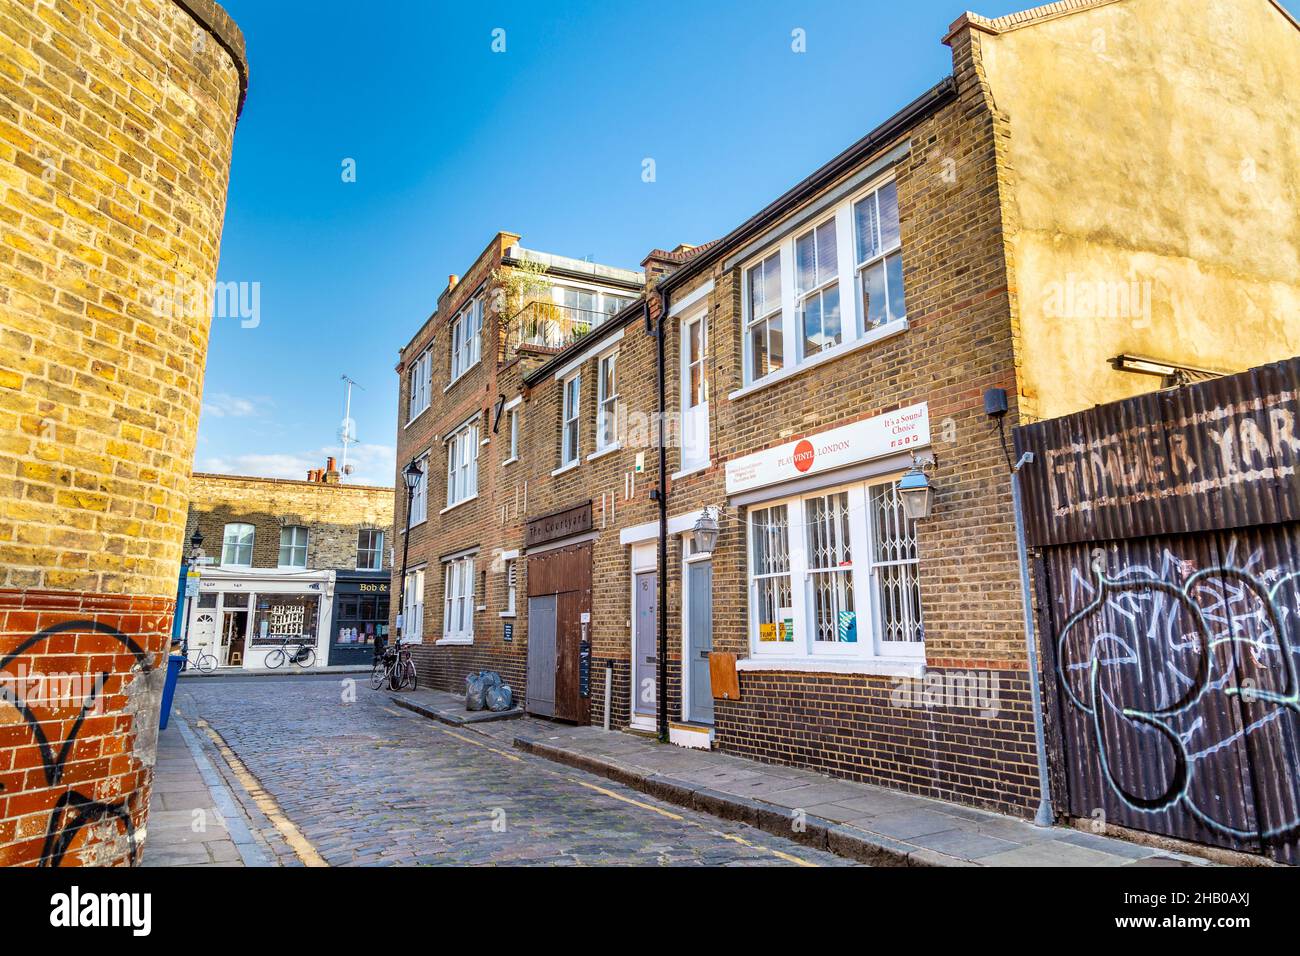 Cobblestone paved Ezra Street in Bethnal Green, London, UK Stock Photo